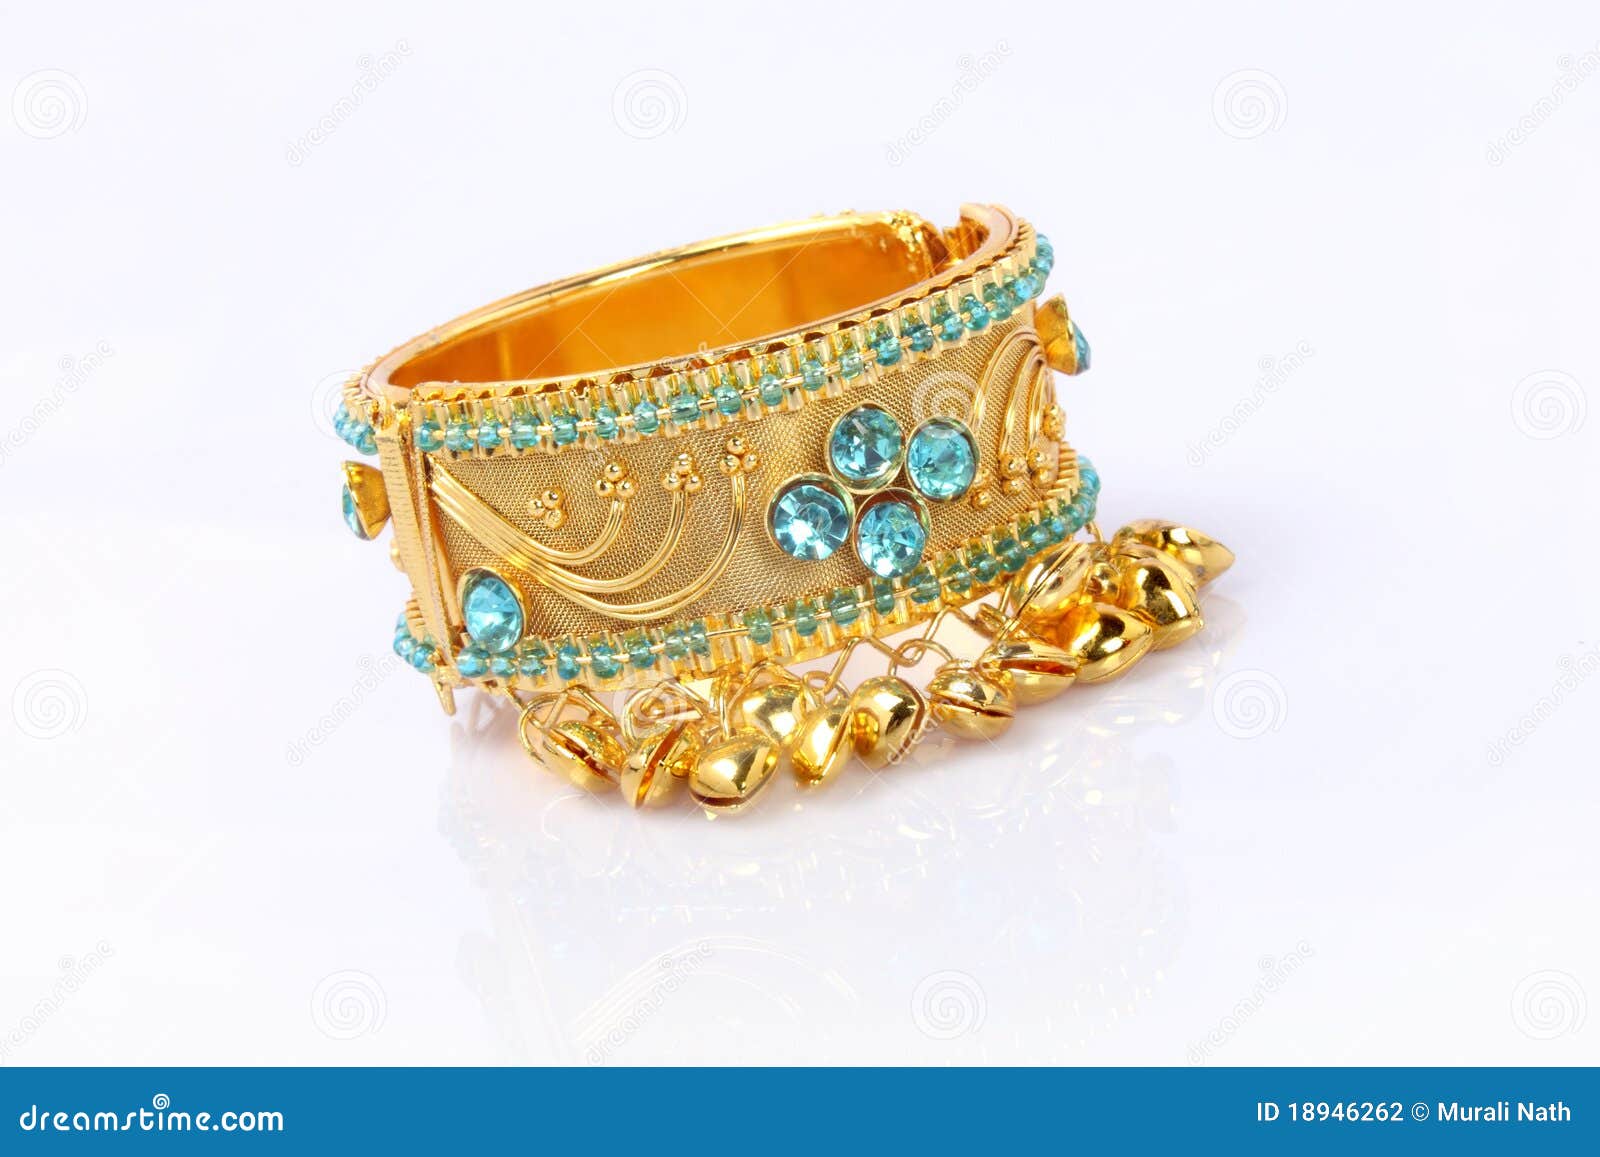 More similar stock images of ` Indian Gold Bracelet `